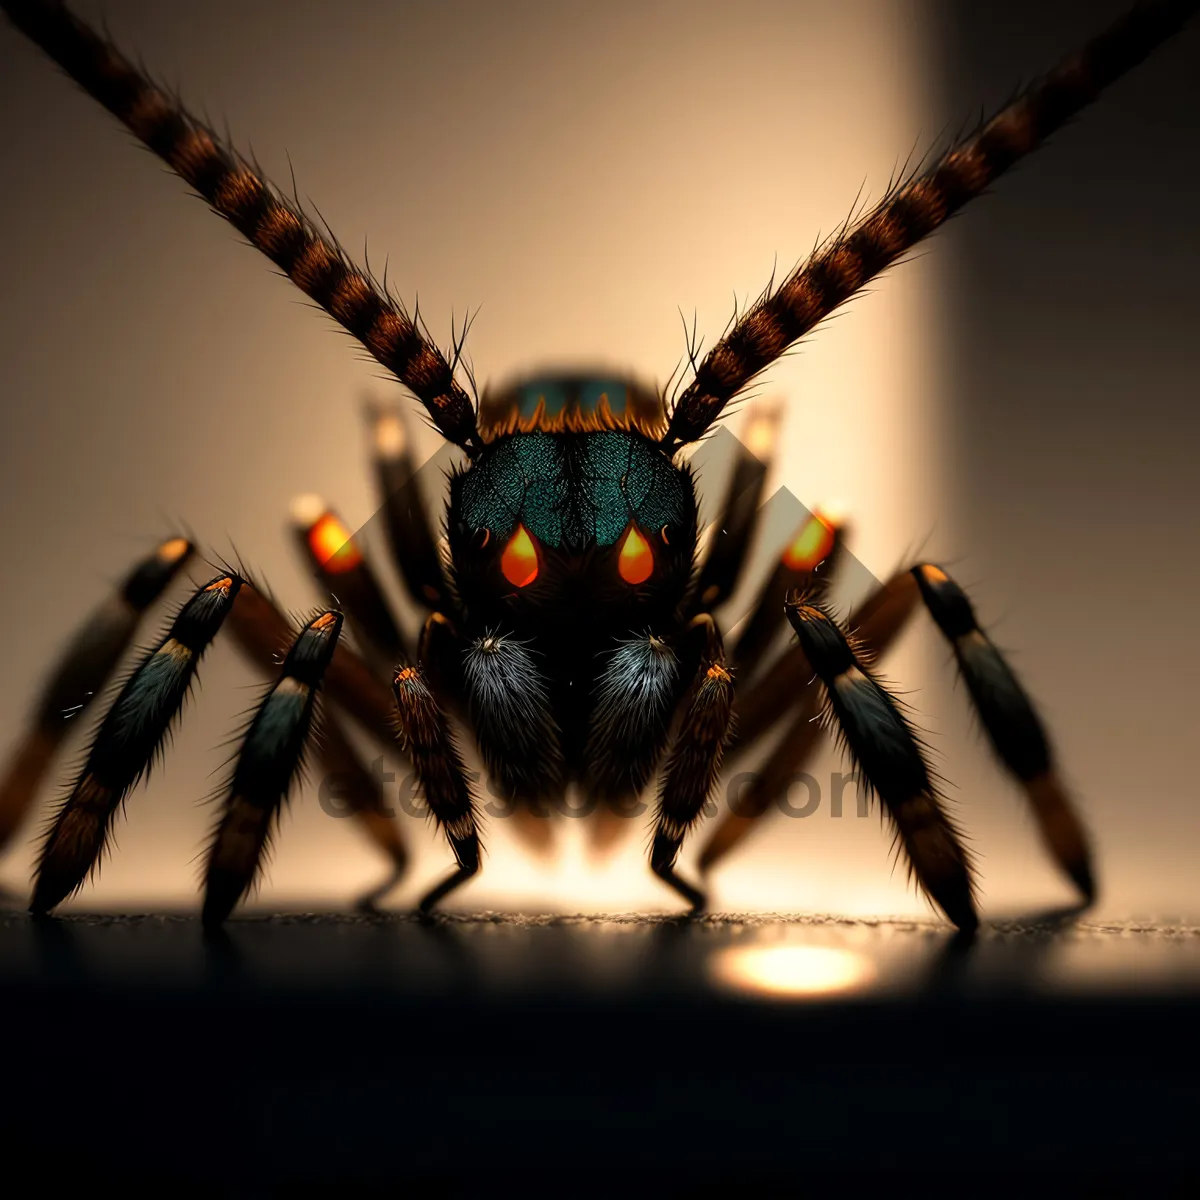 Picture of Black Widow Spider - Close-Up Wildlife Shot